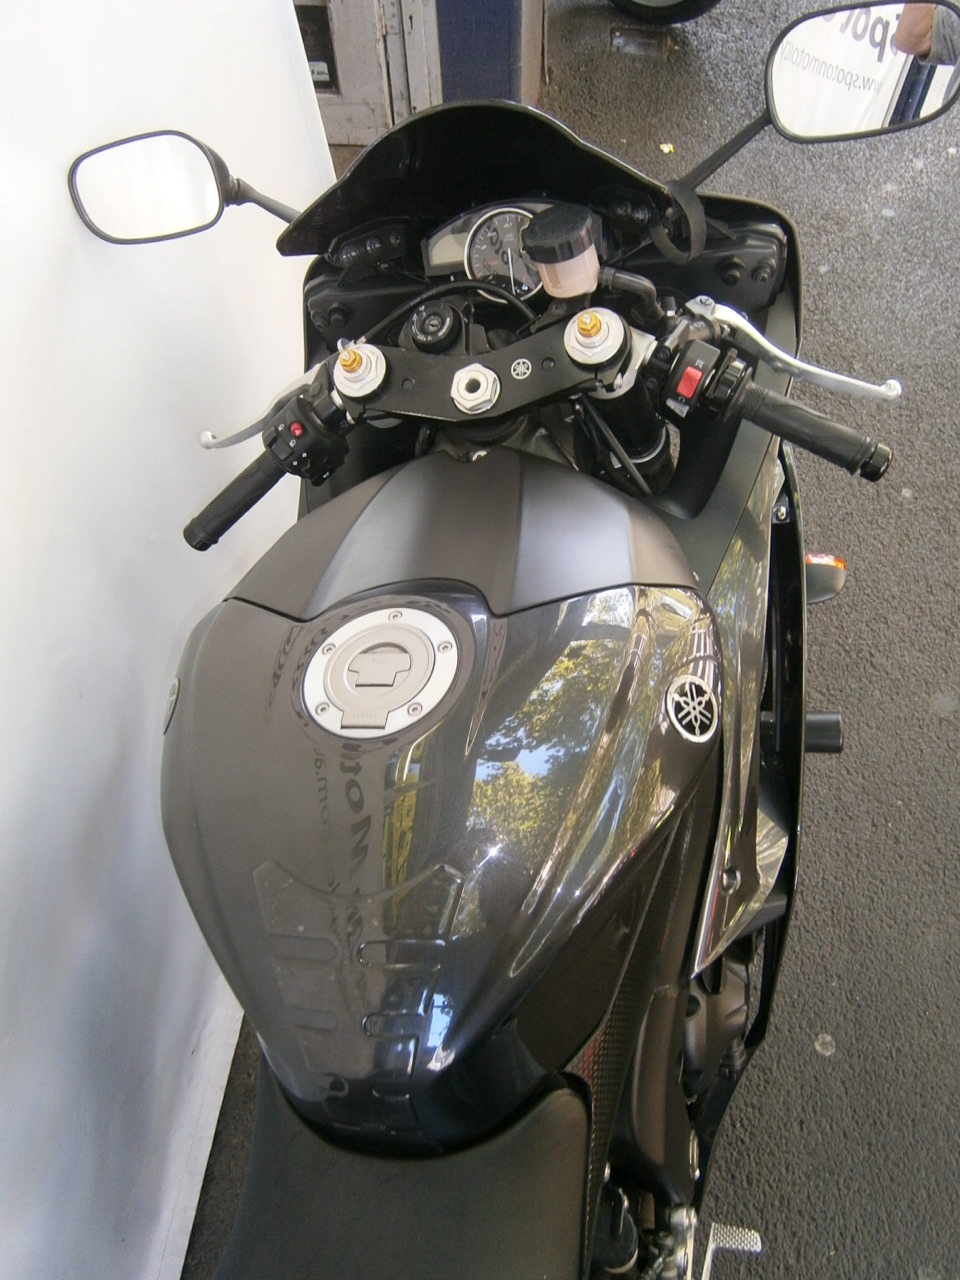 Spot On Motorcycles | 94 Hoddle St, Collingwood VIC 3066, Australia | Phone: (03) 9329 8222